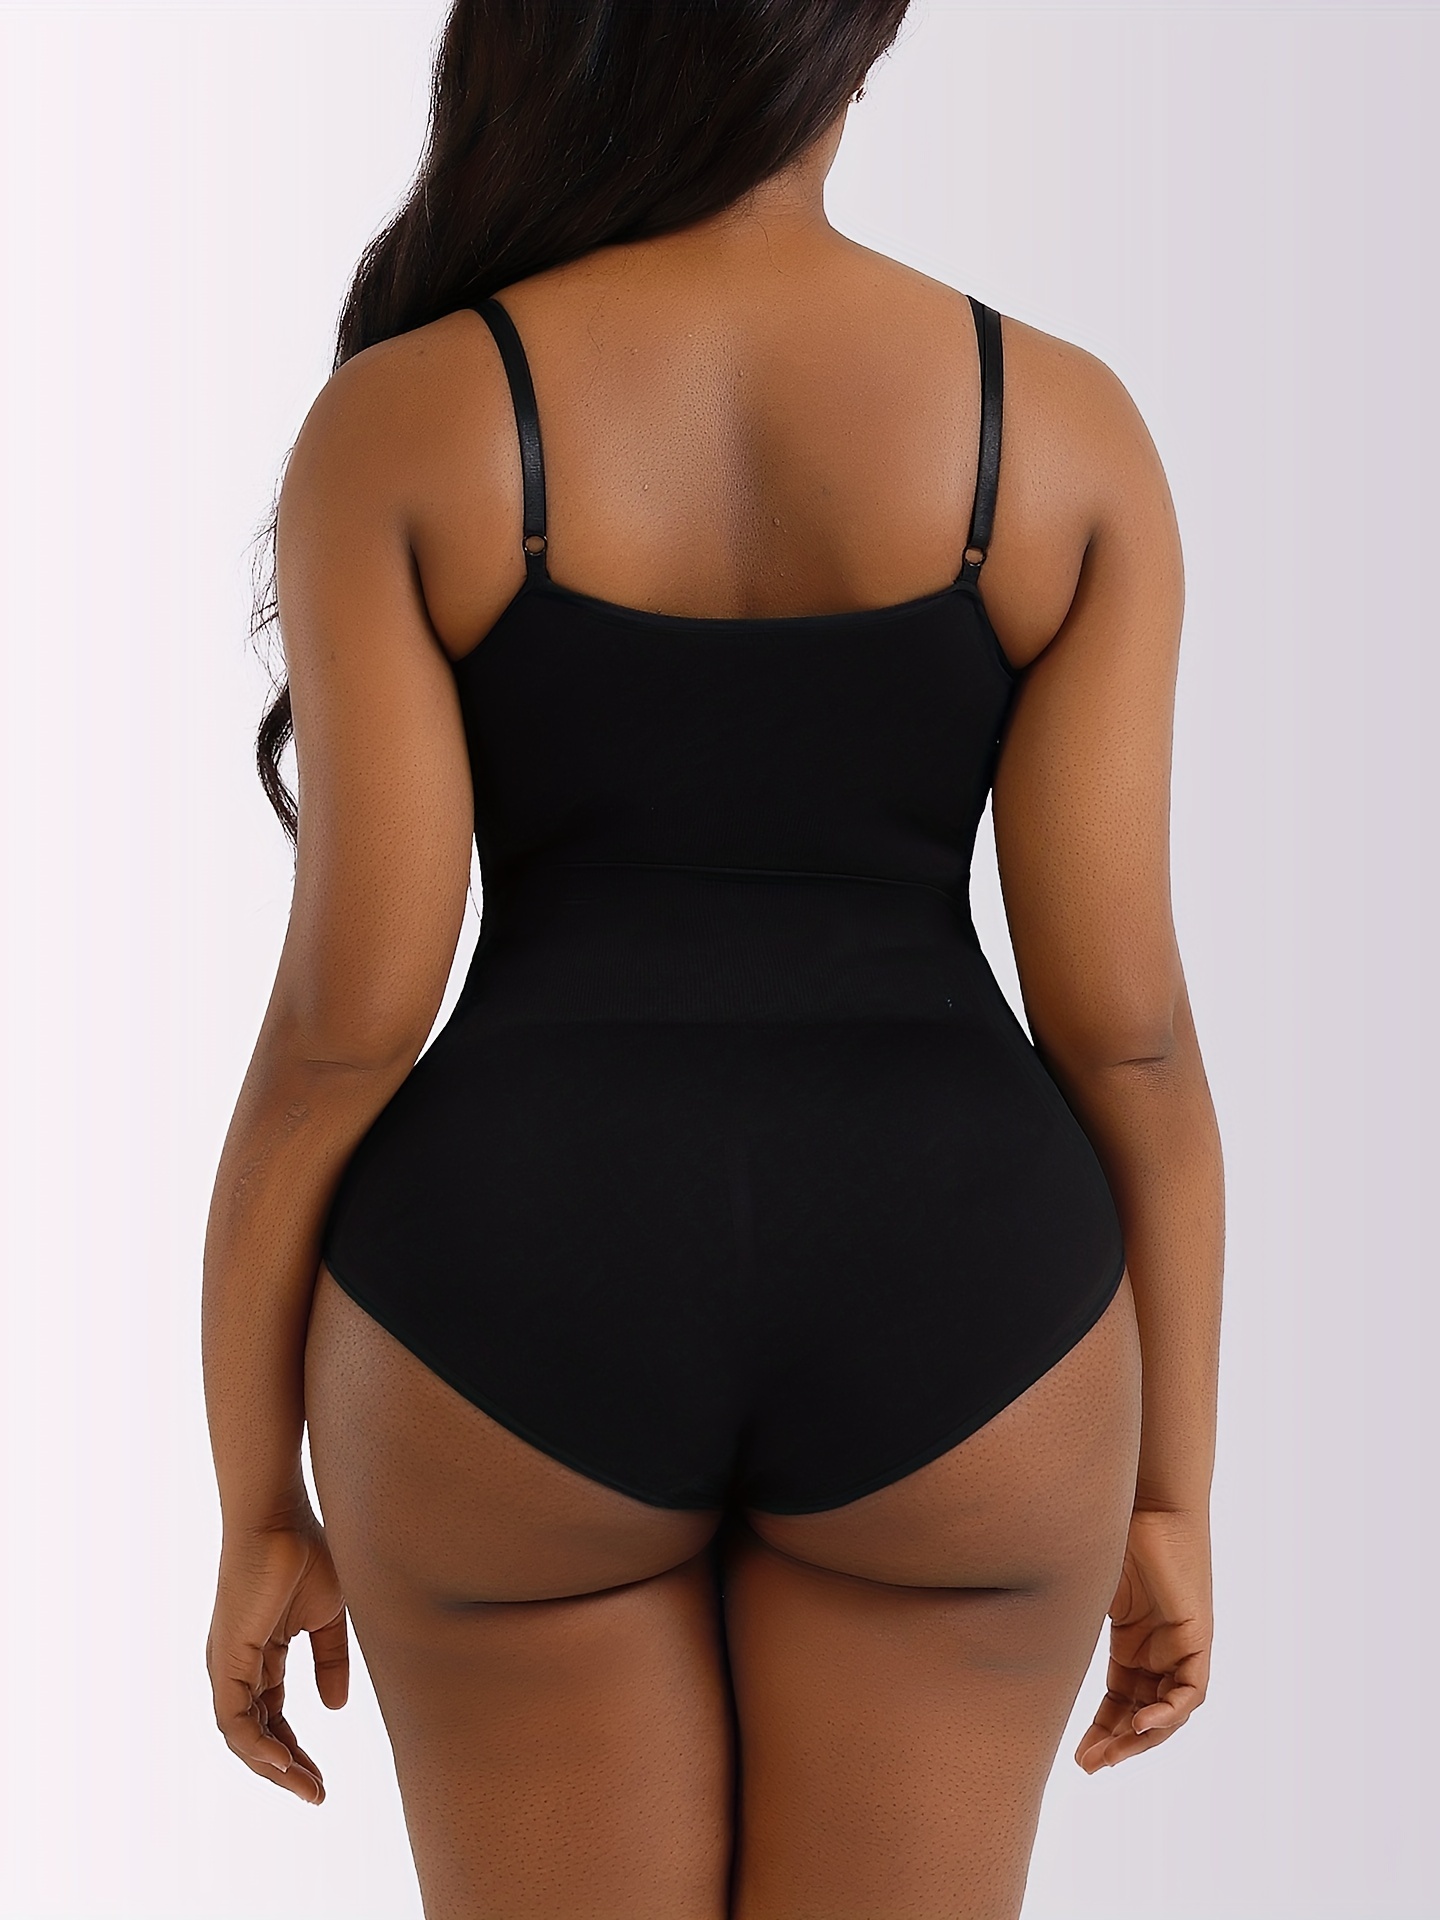 Gotoly Women Slimming Bodysuits Shapewear black XL/XXL body shaper B04